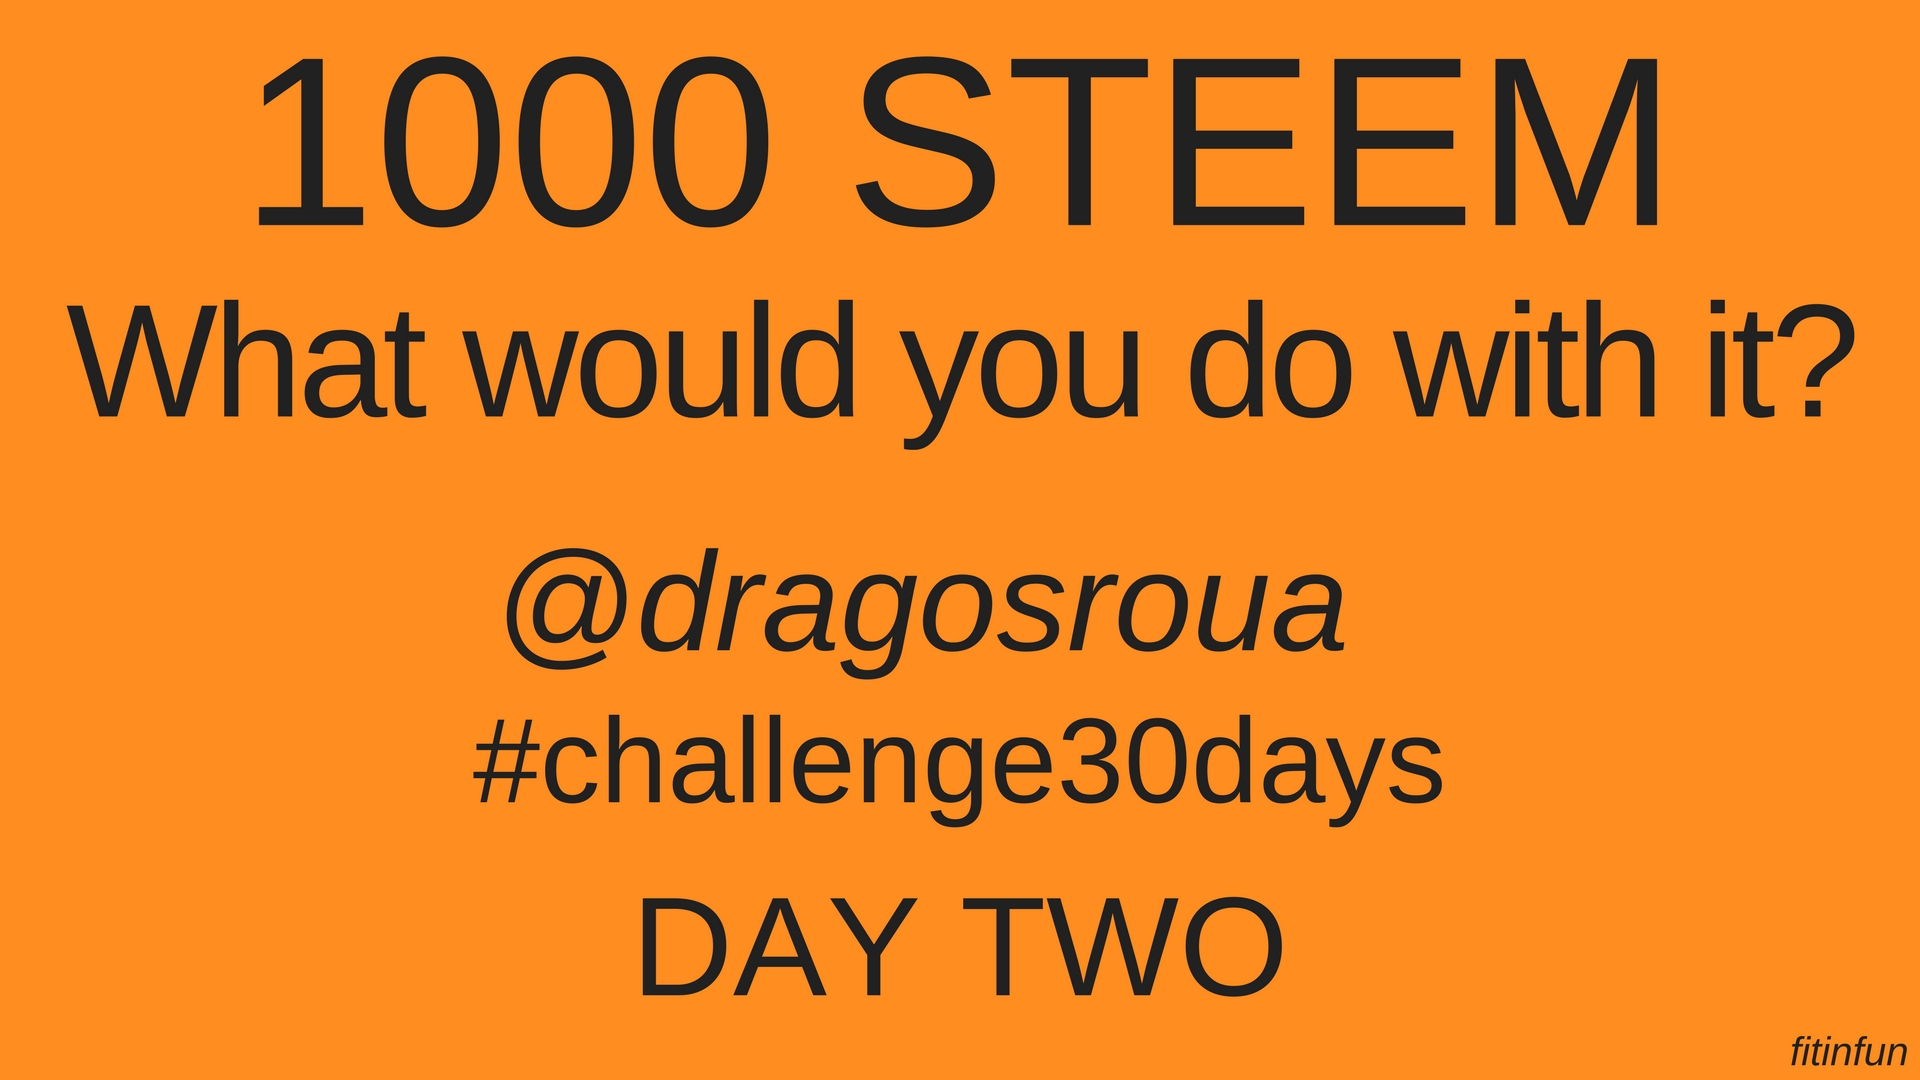 1000 STEEM dragosroua challenge fitinfun.jpg